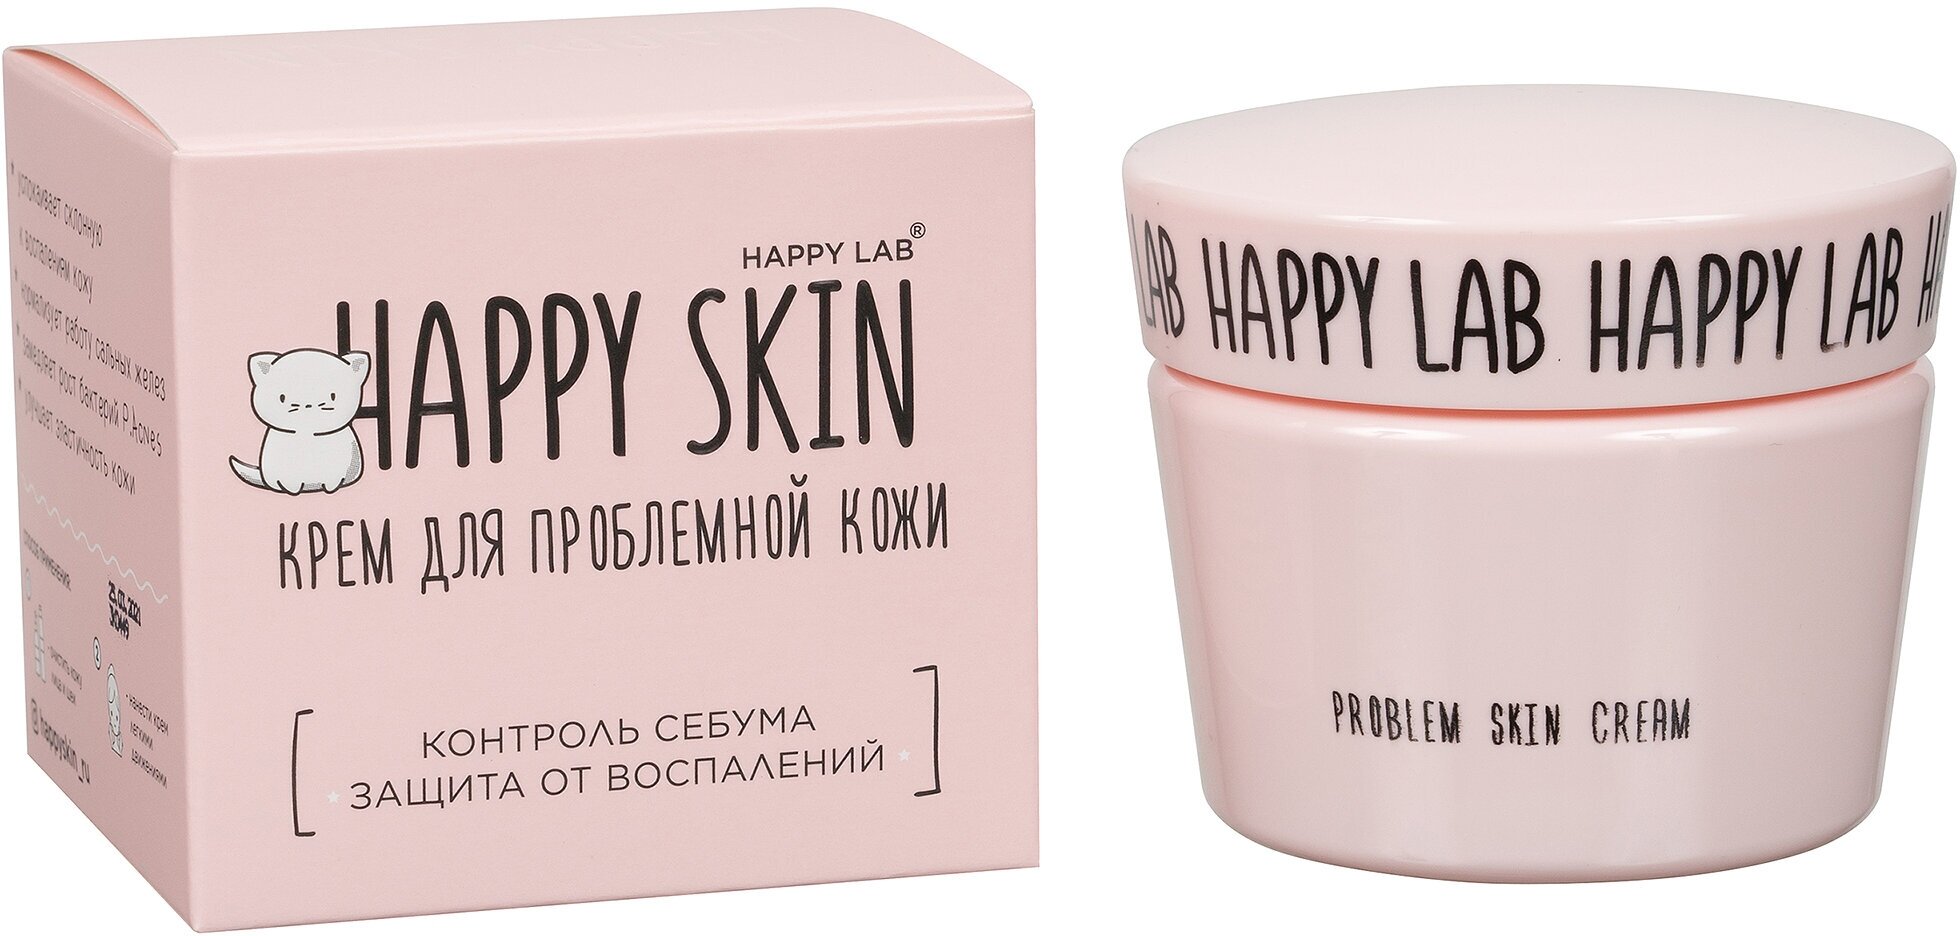 Happy Skin Крем для проблемной кожи Problem skin cream, 50 мл - фотография № 13